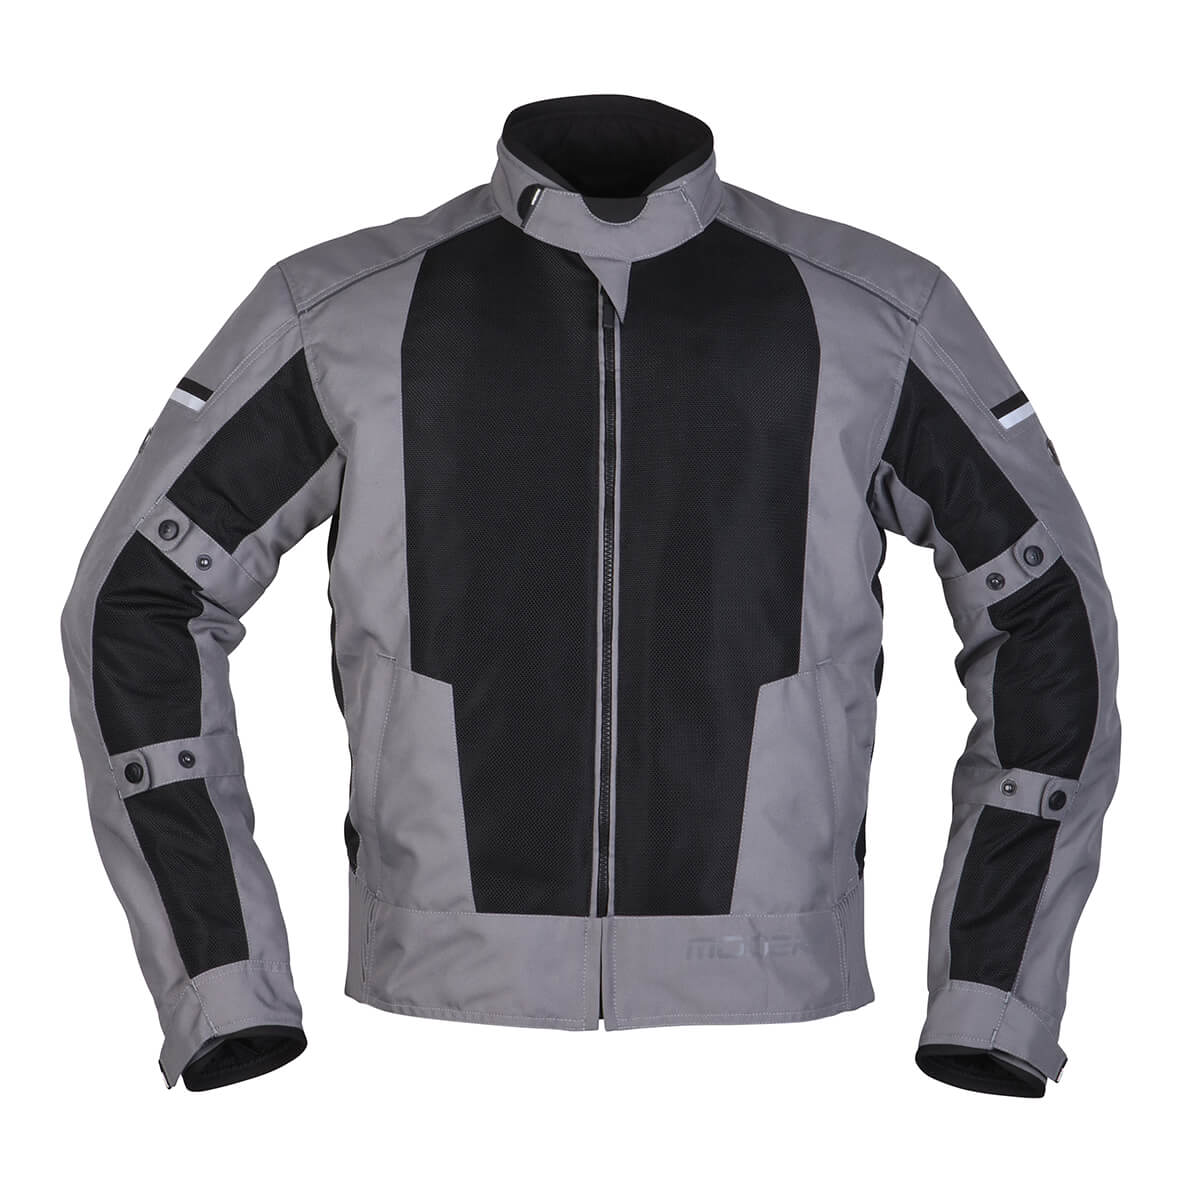 Image of Modeka Veo Air Jacket Black Gray Size M ID 4045765189849